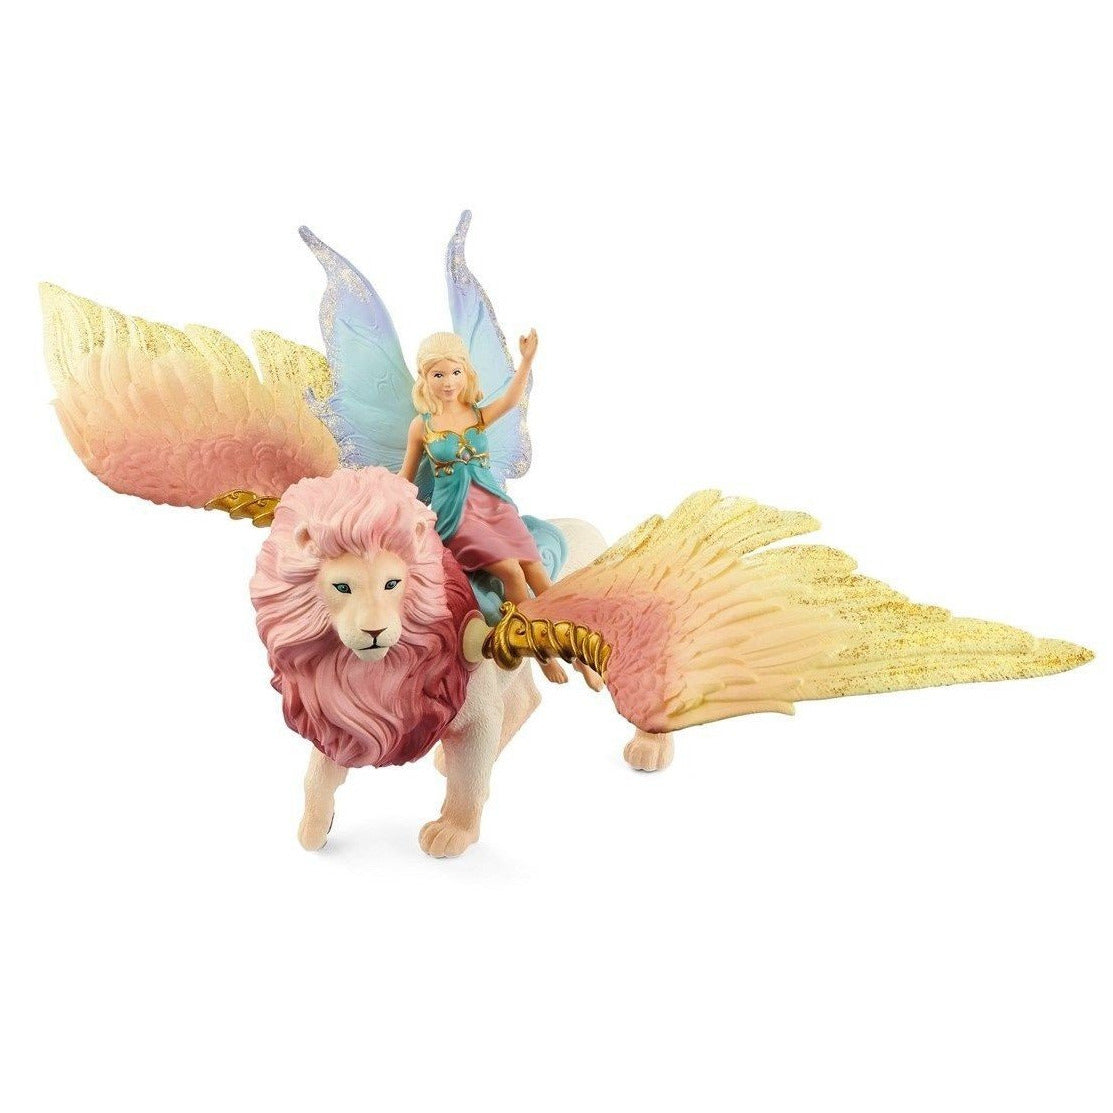 Fairy In Flight On Winged Lion